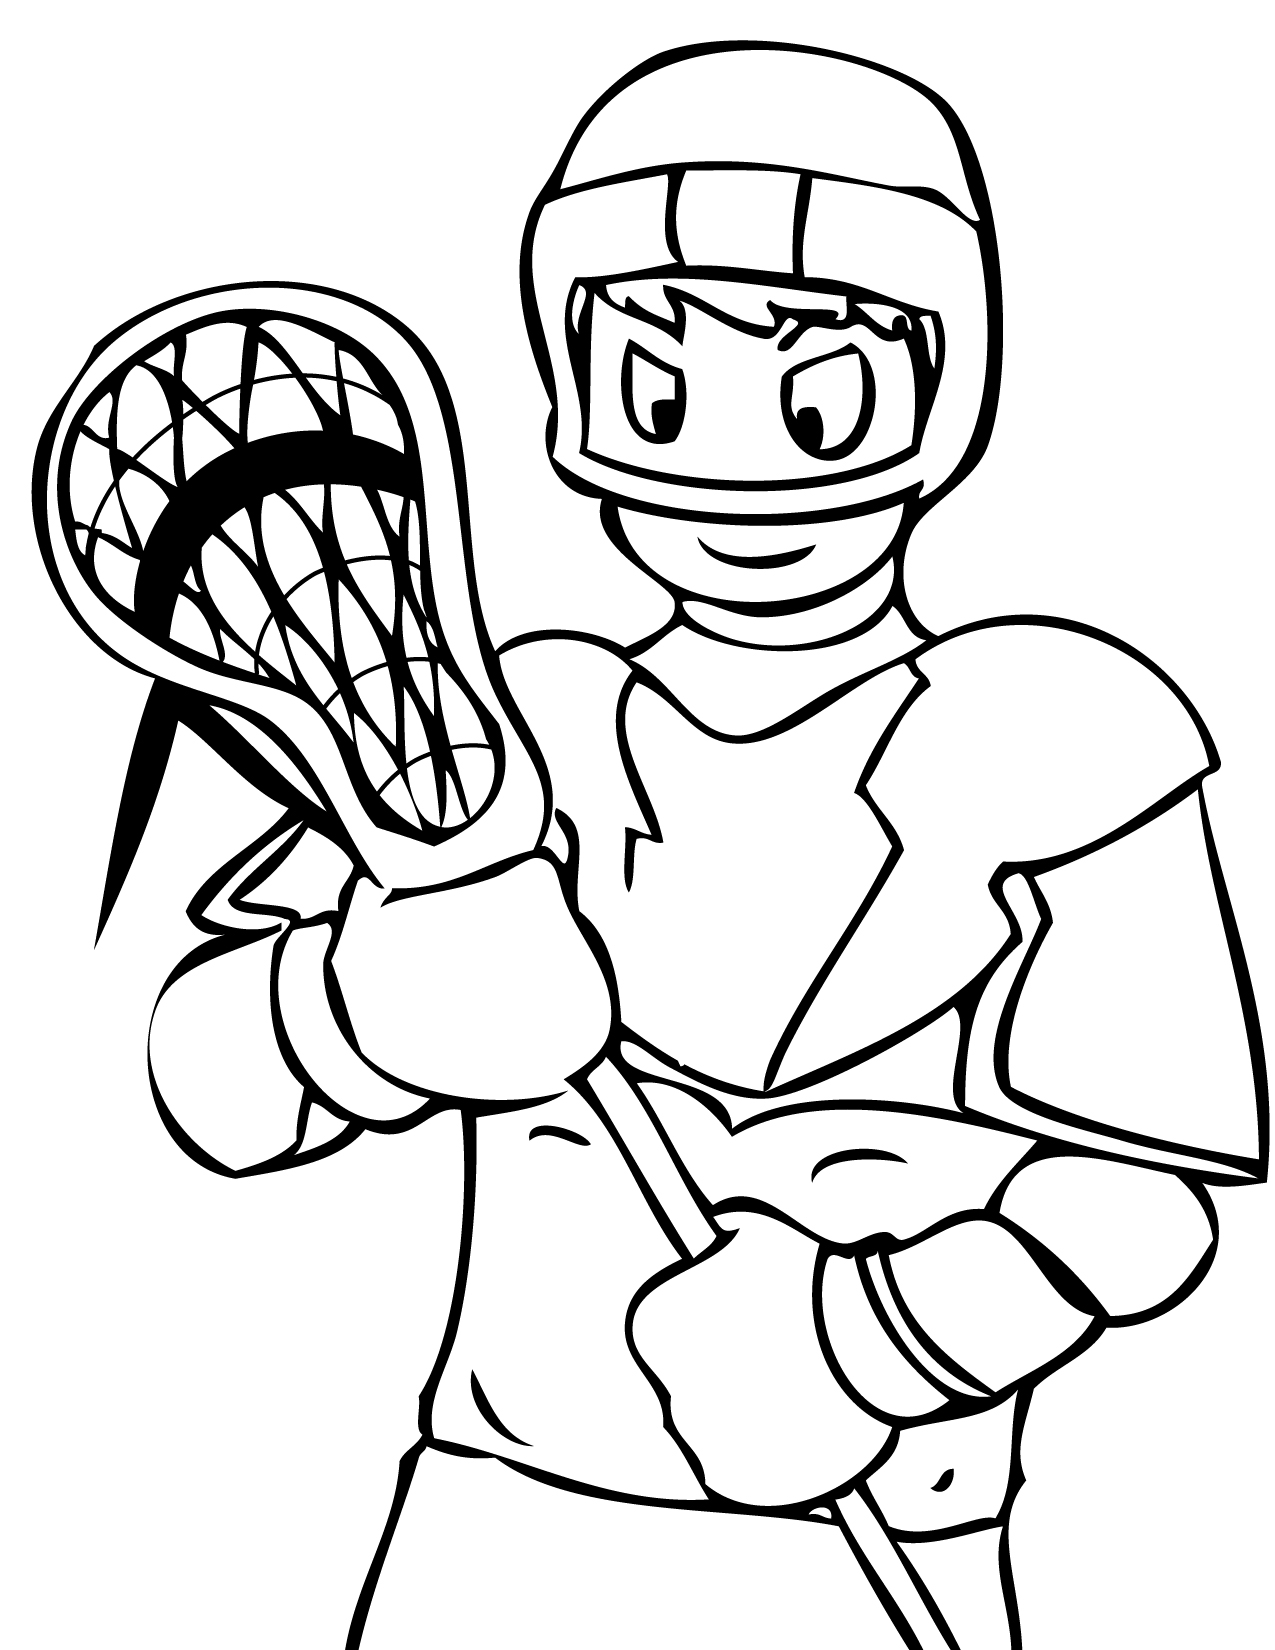 lacrosse coloring pages - photo #4